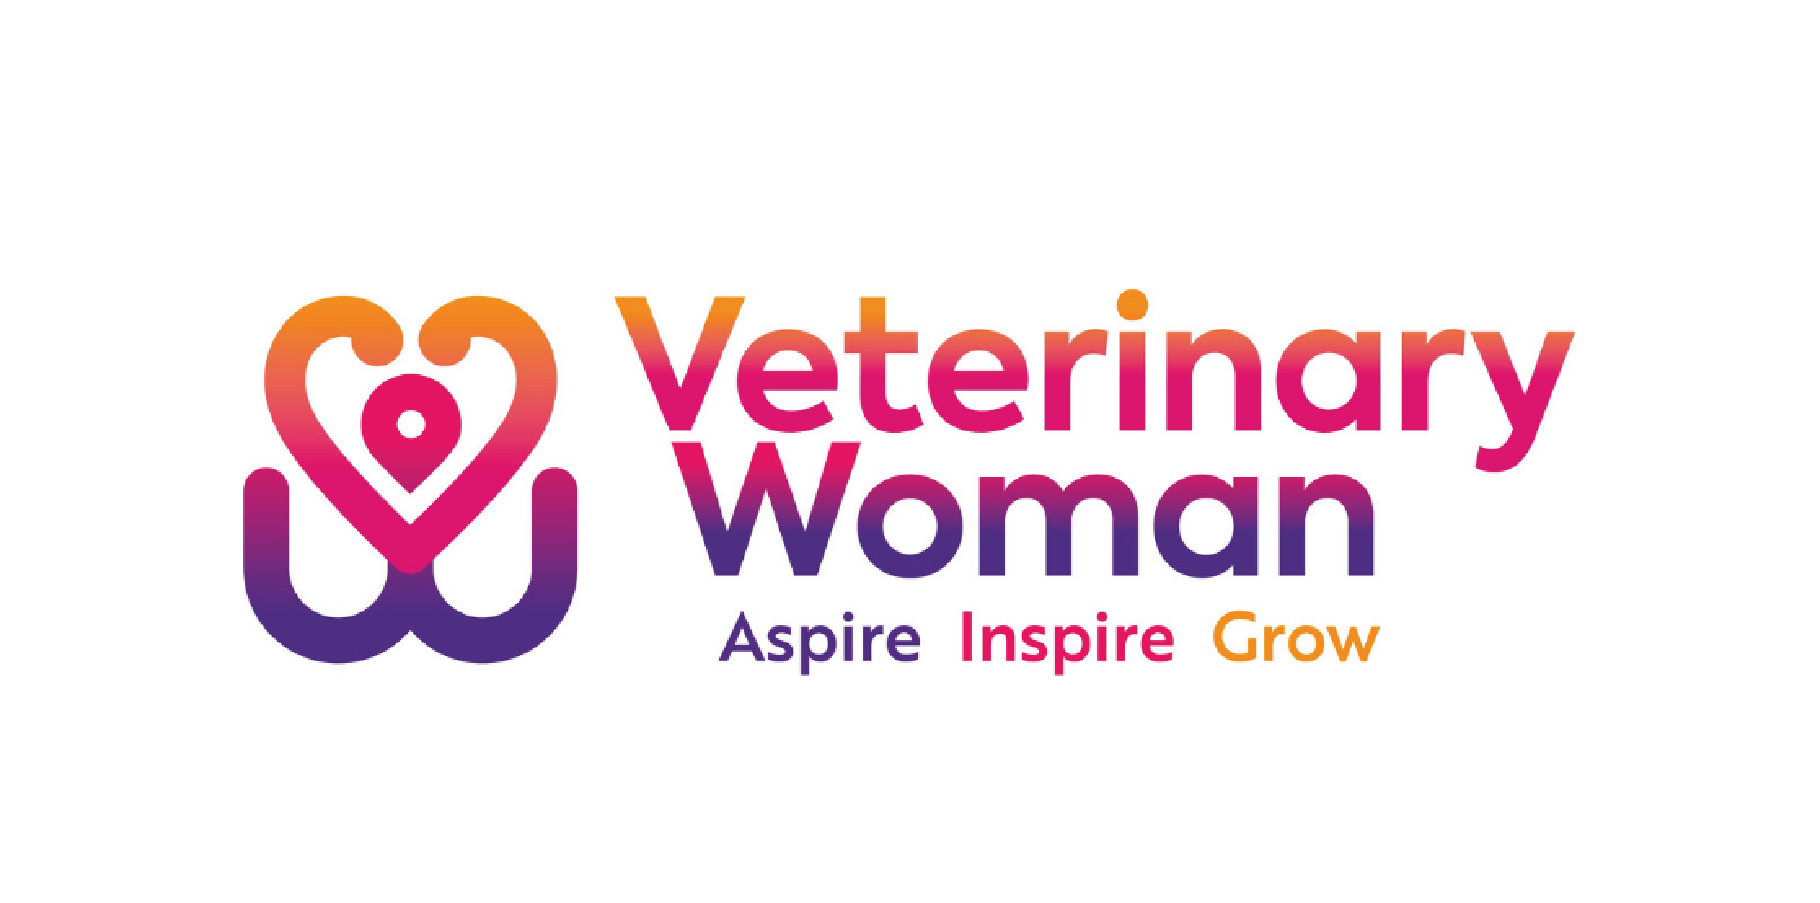 Provet Cloud sponsors Veterinary Woman